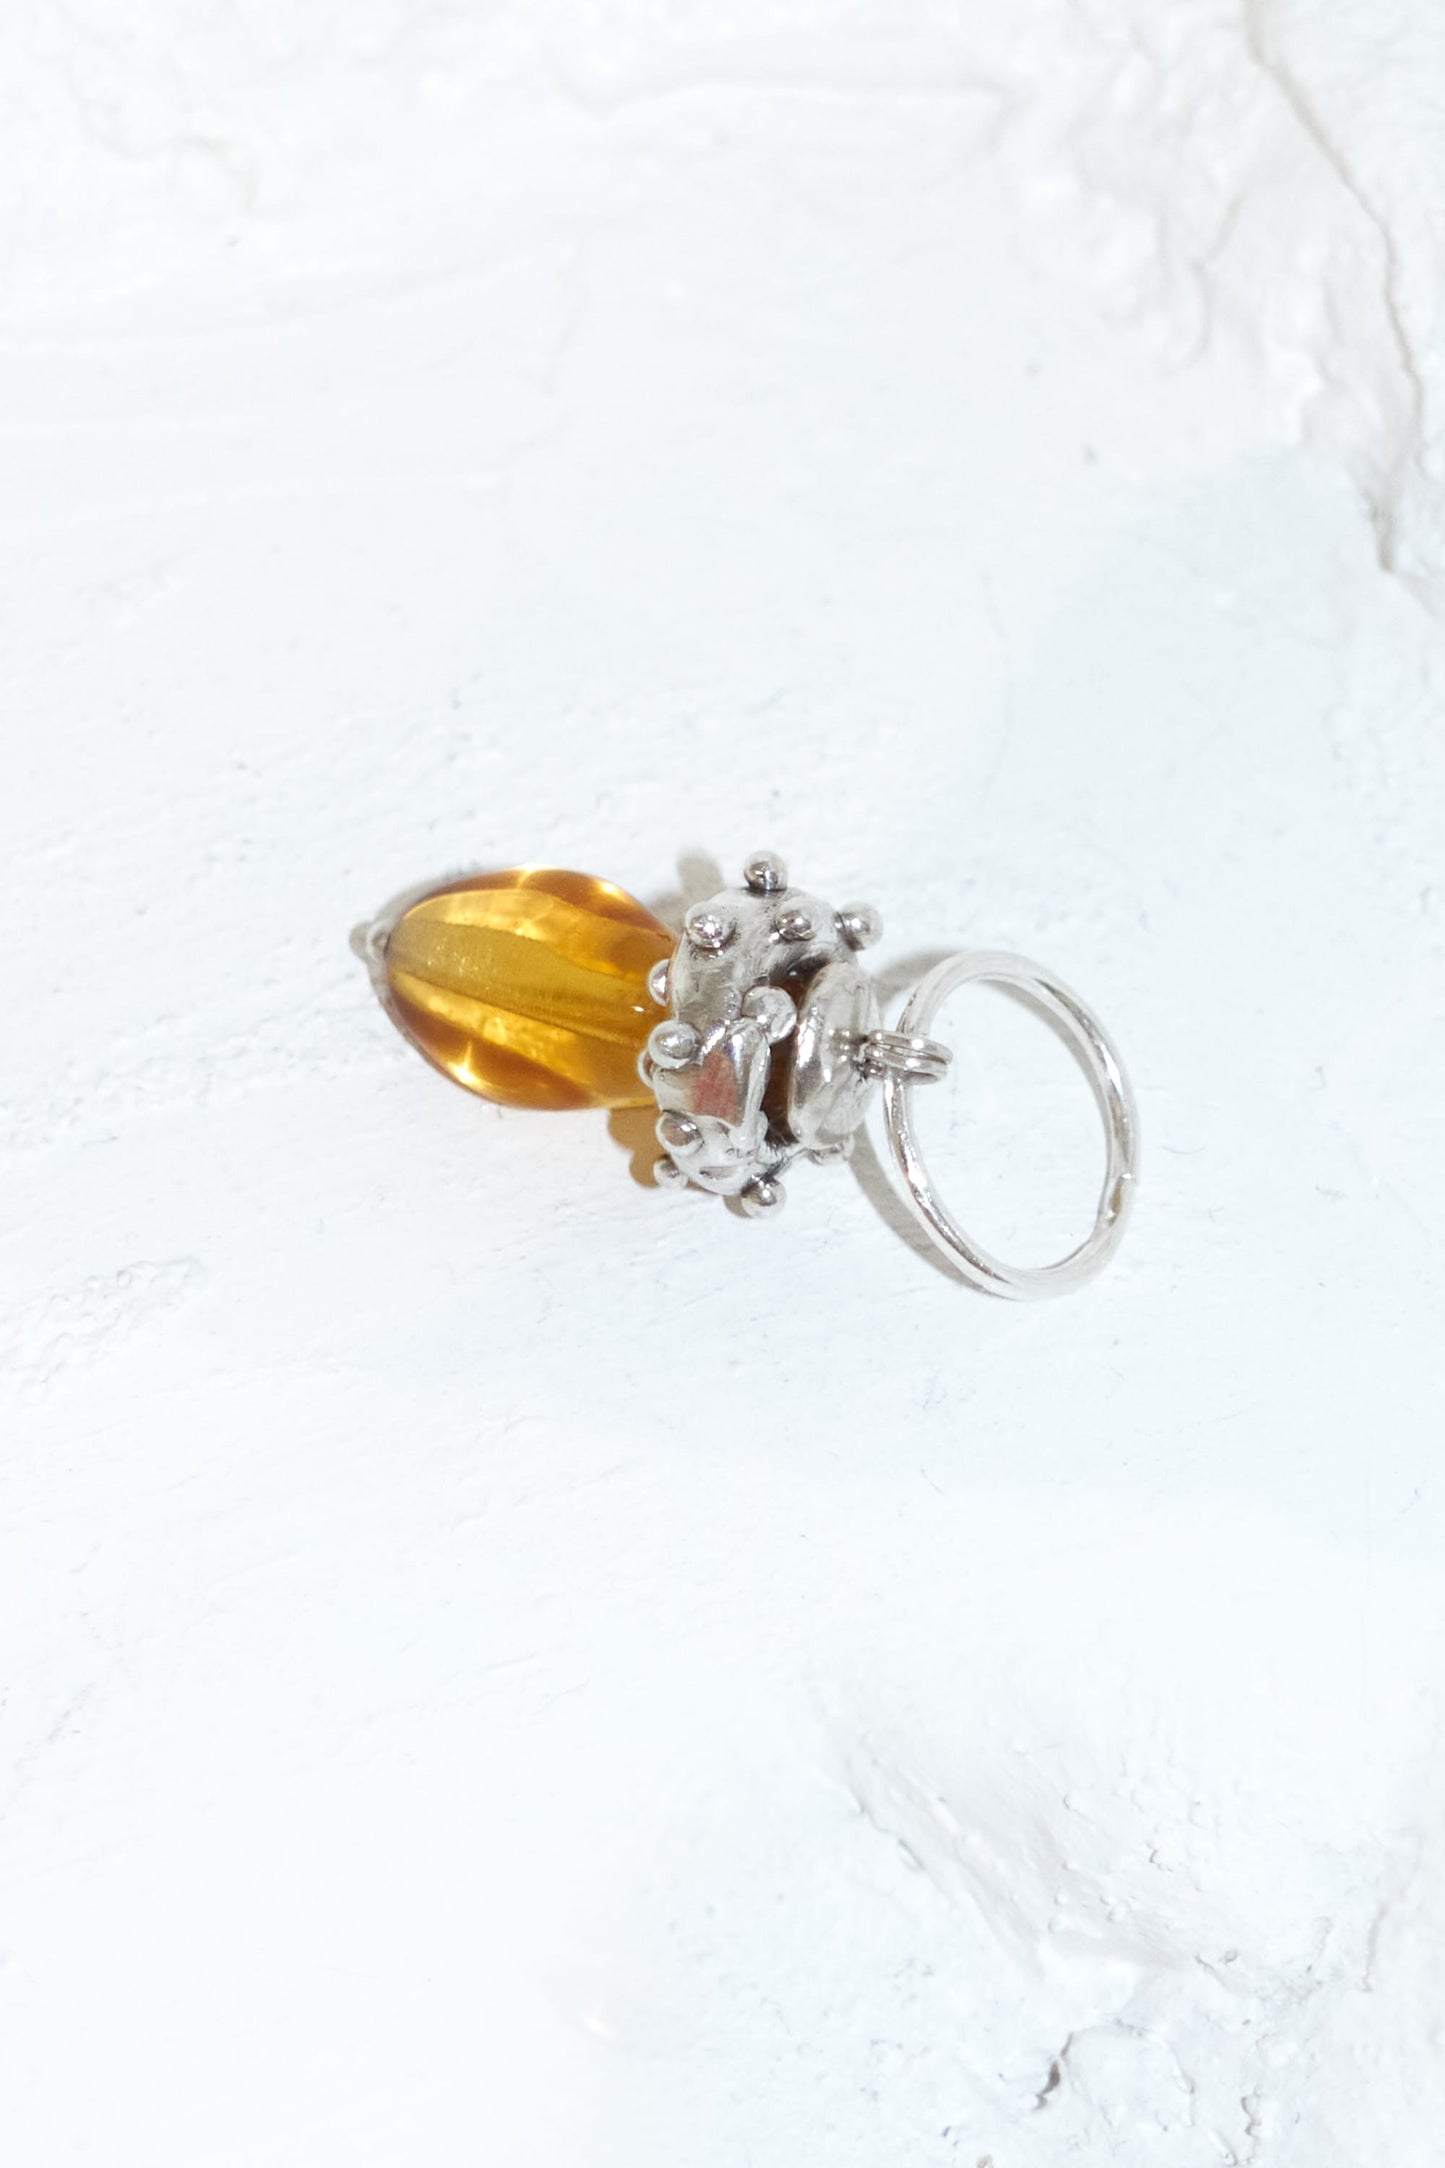 Romelia handmade silver and vintage glass bead earrings